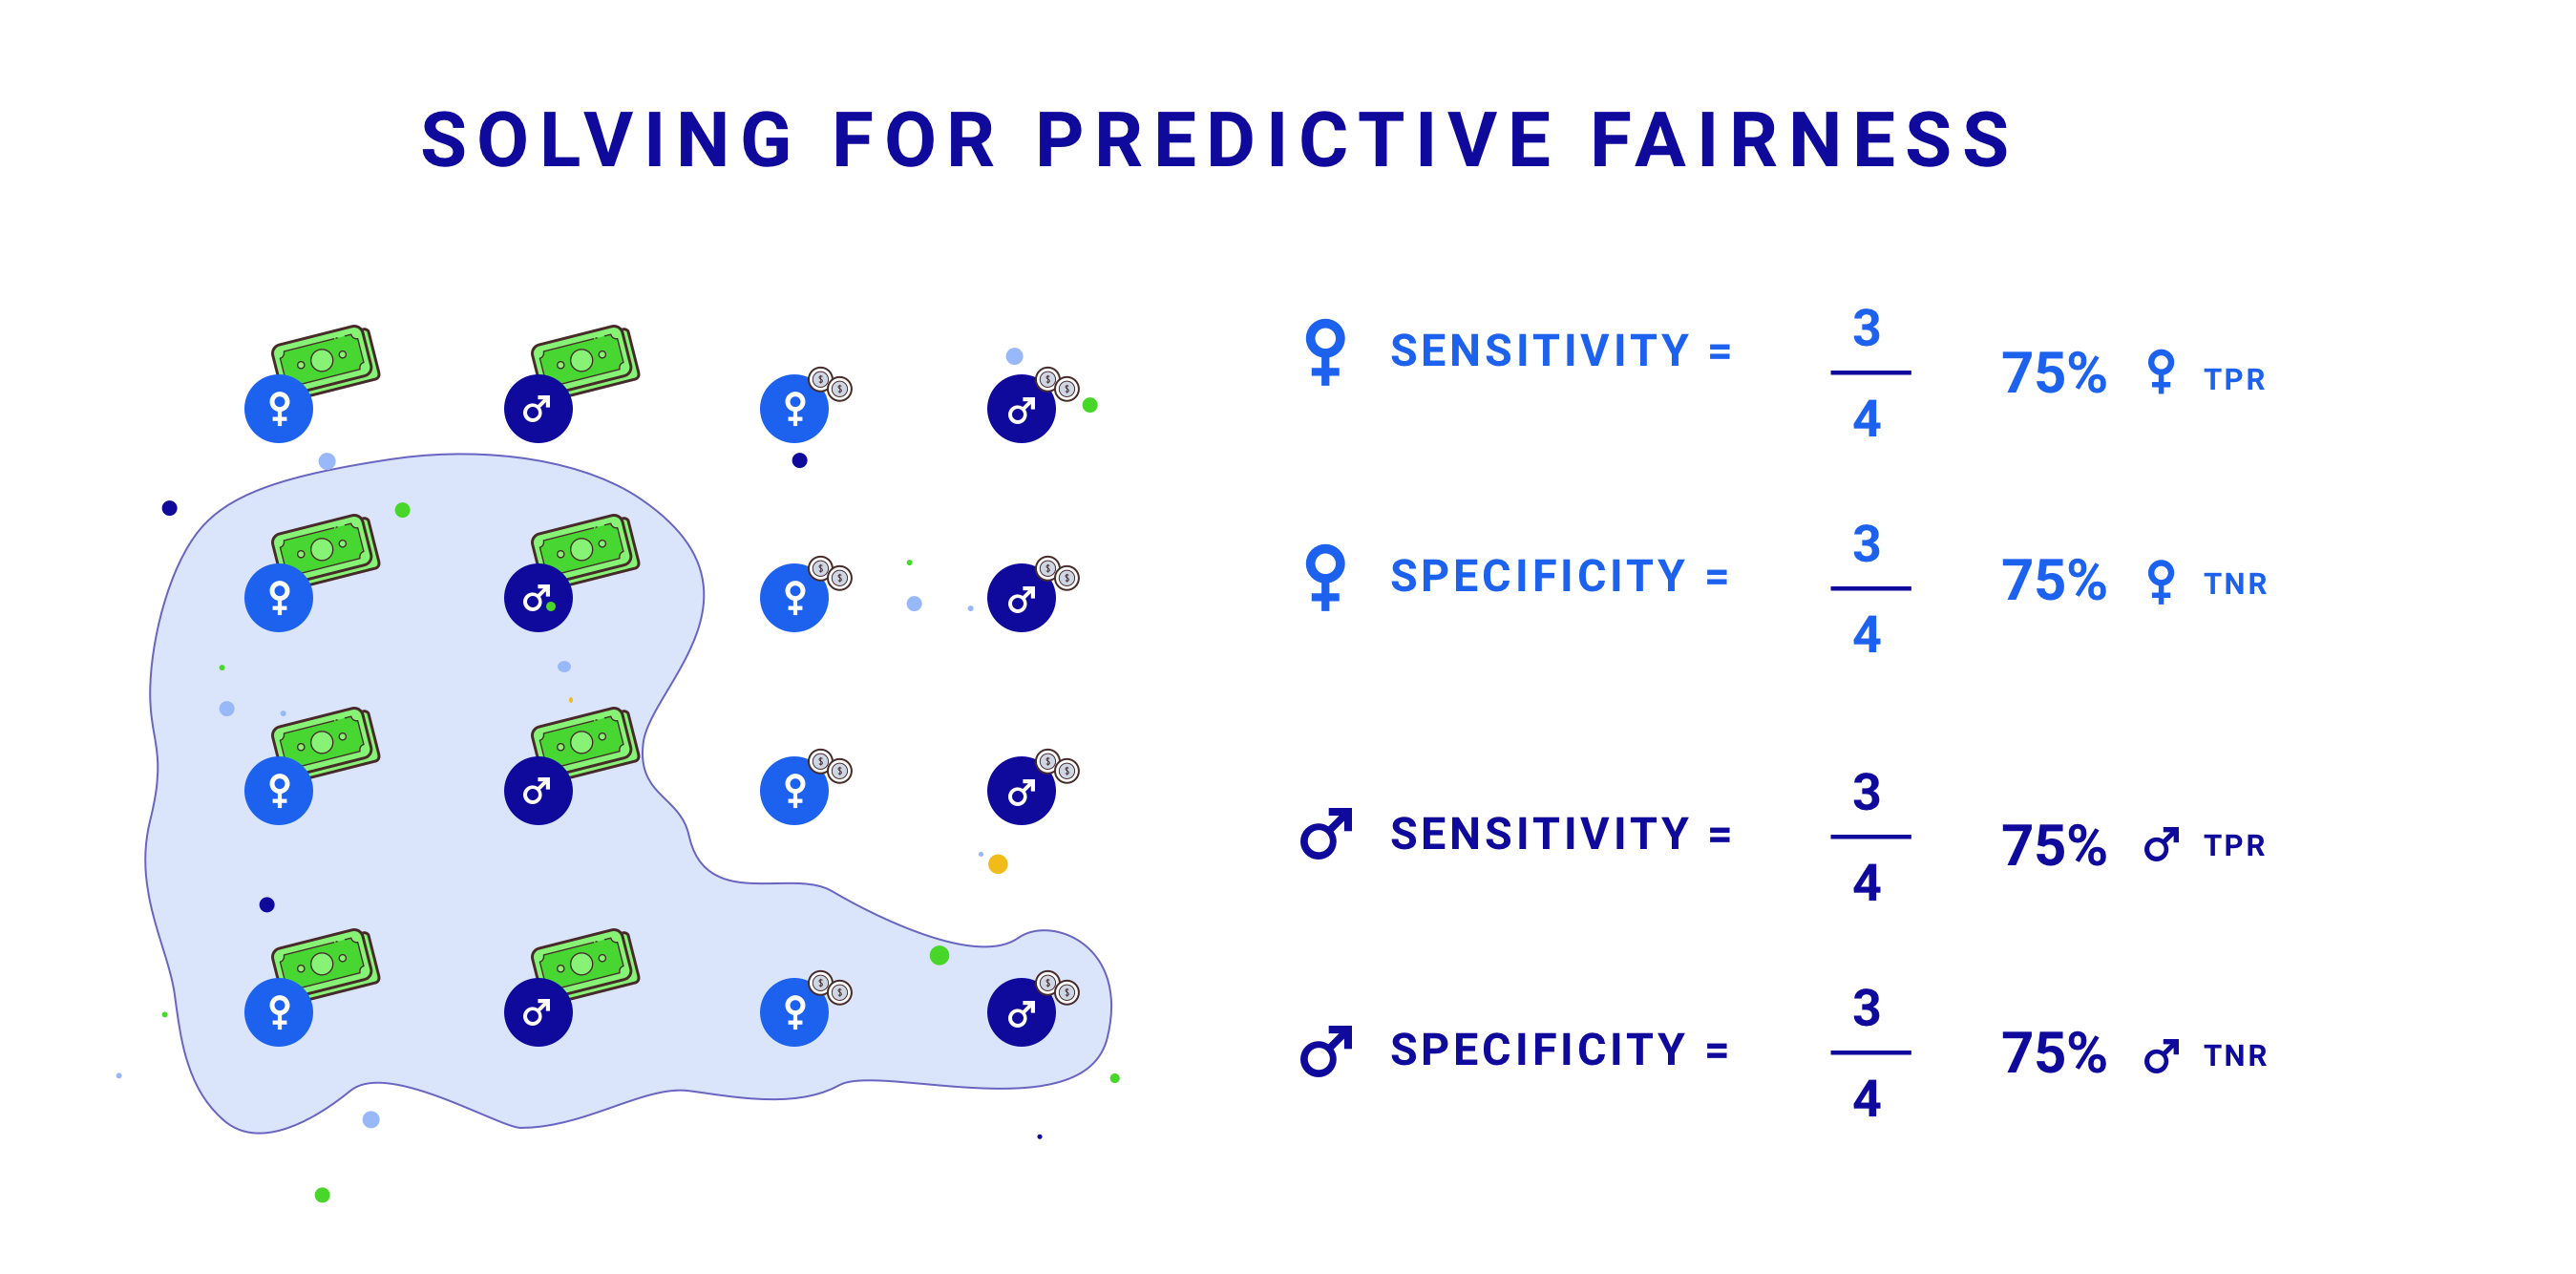 Solving for Predictive Fairness